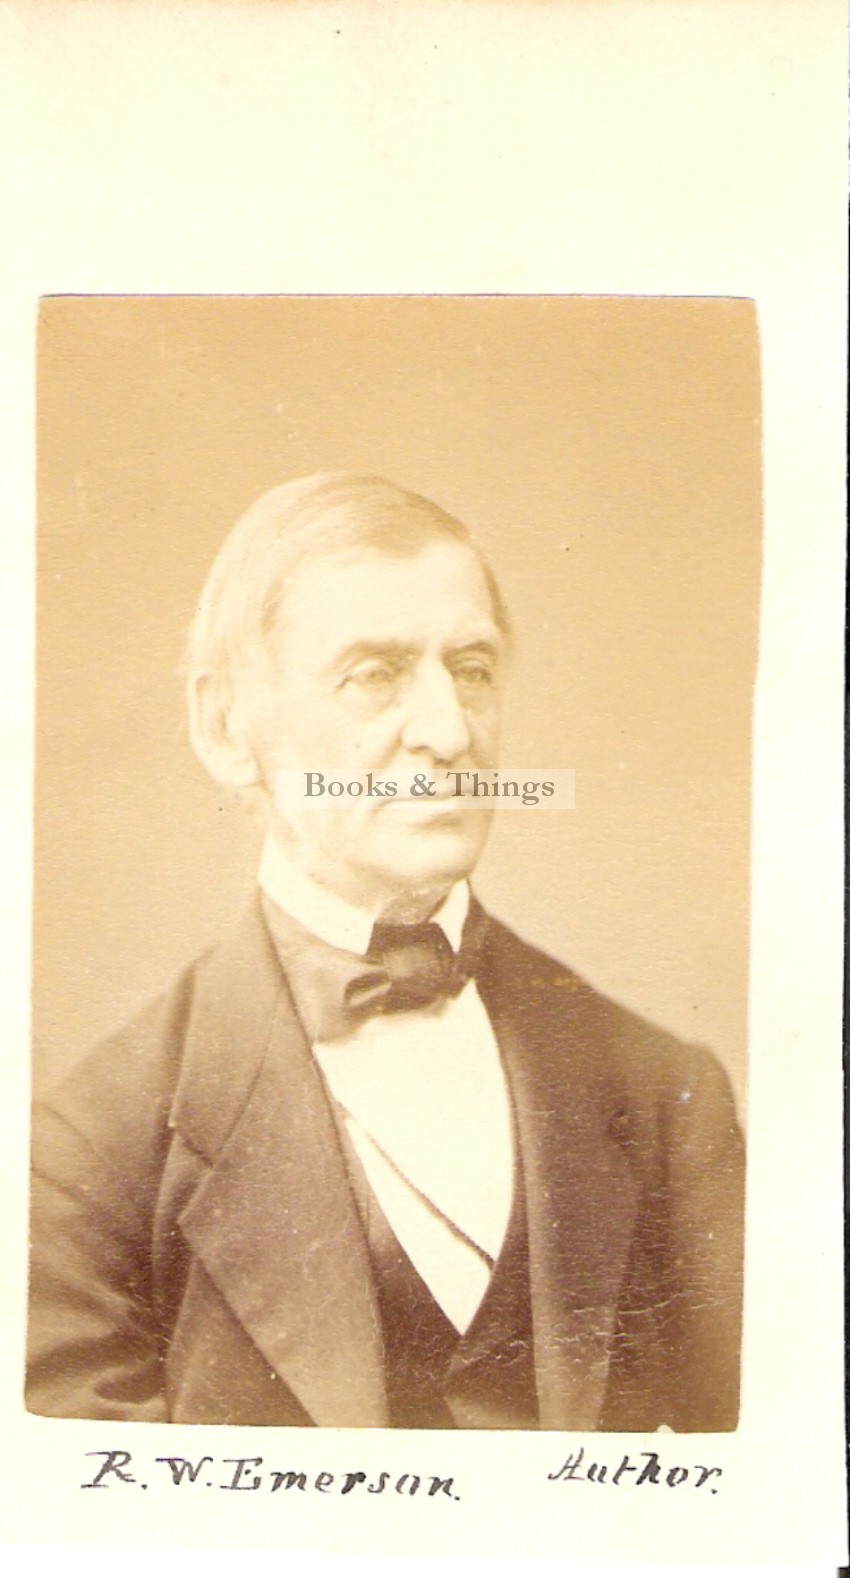 Ralph Waldo Emerson photograph